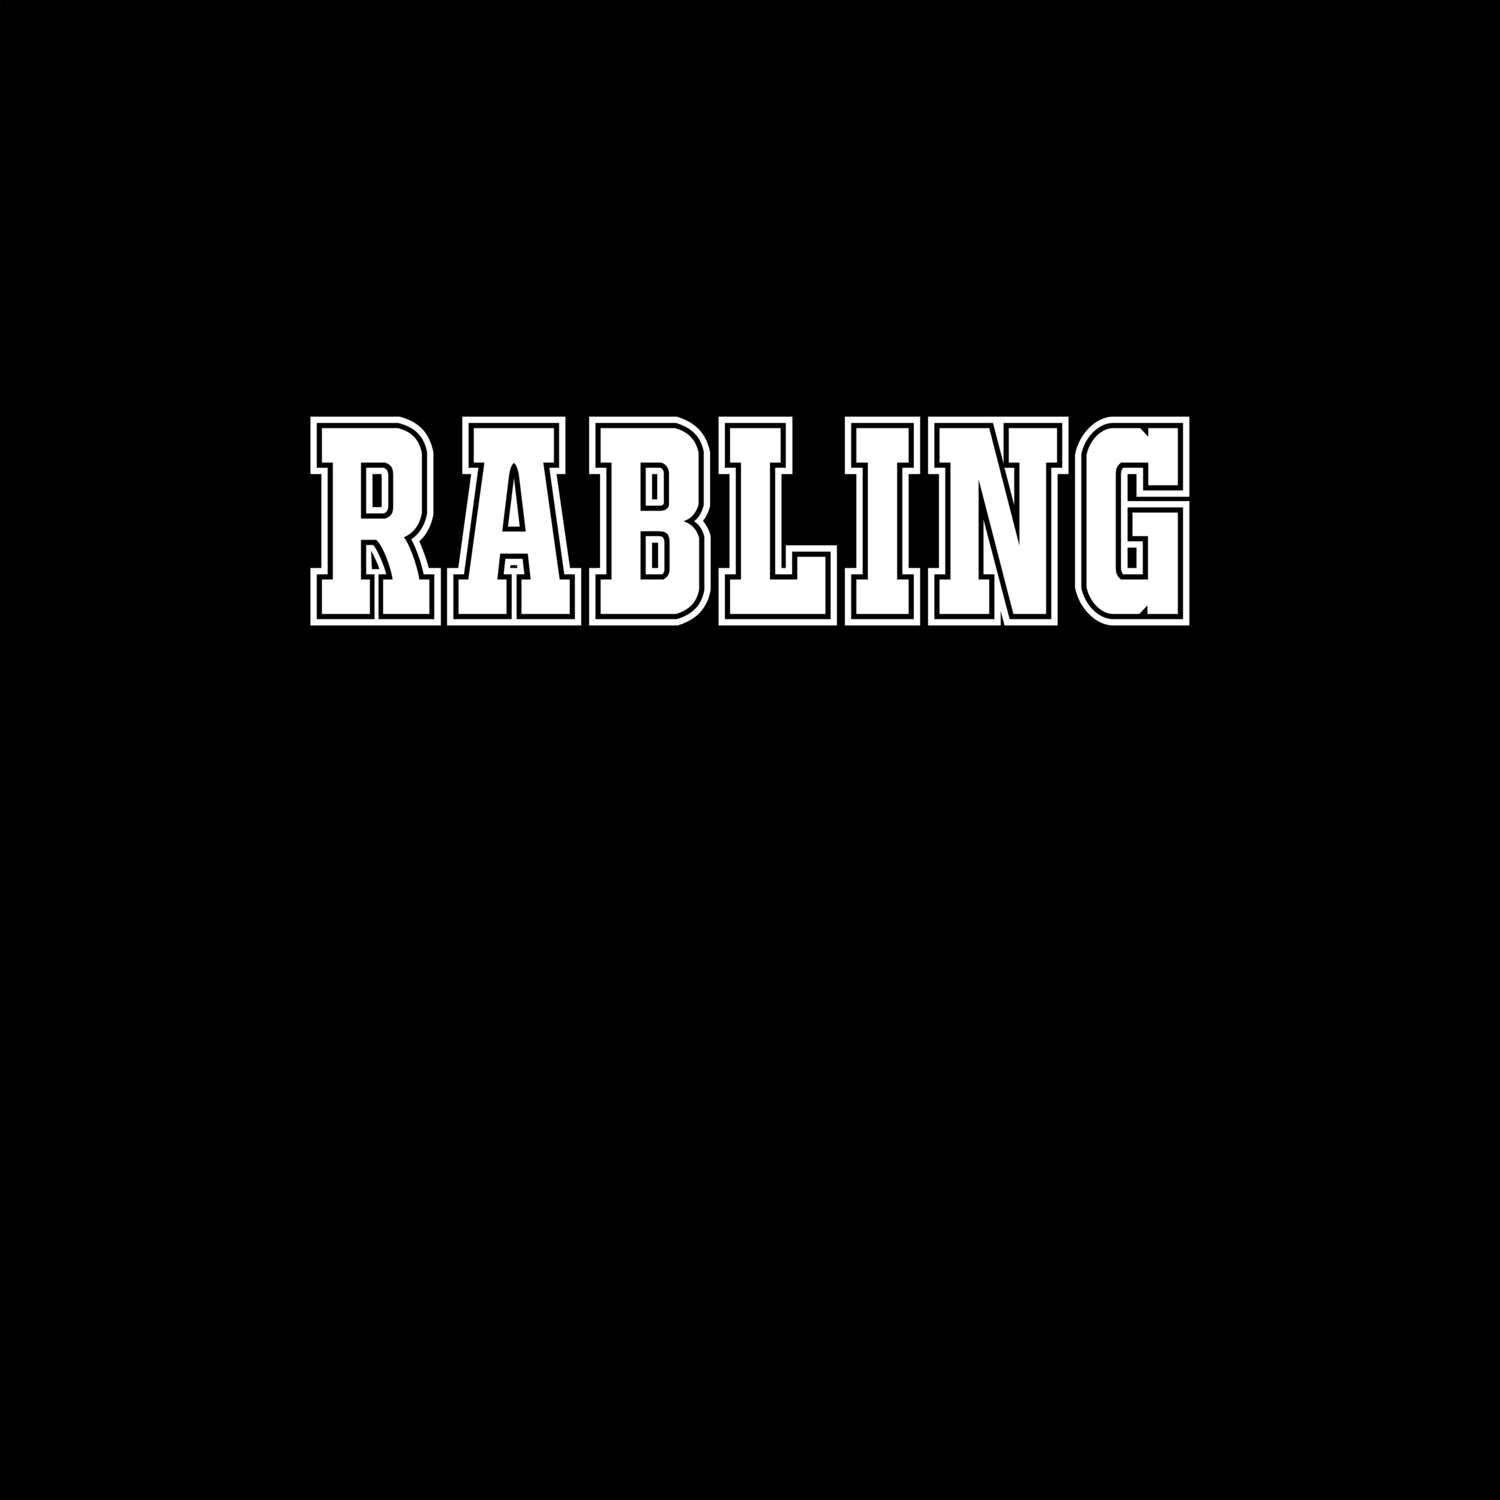 Rabling T-Shirt »Classic«